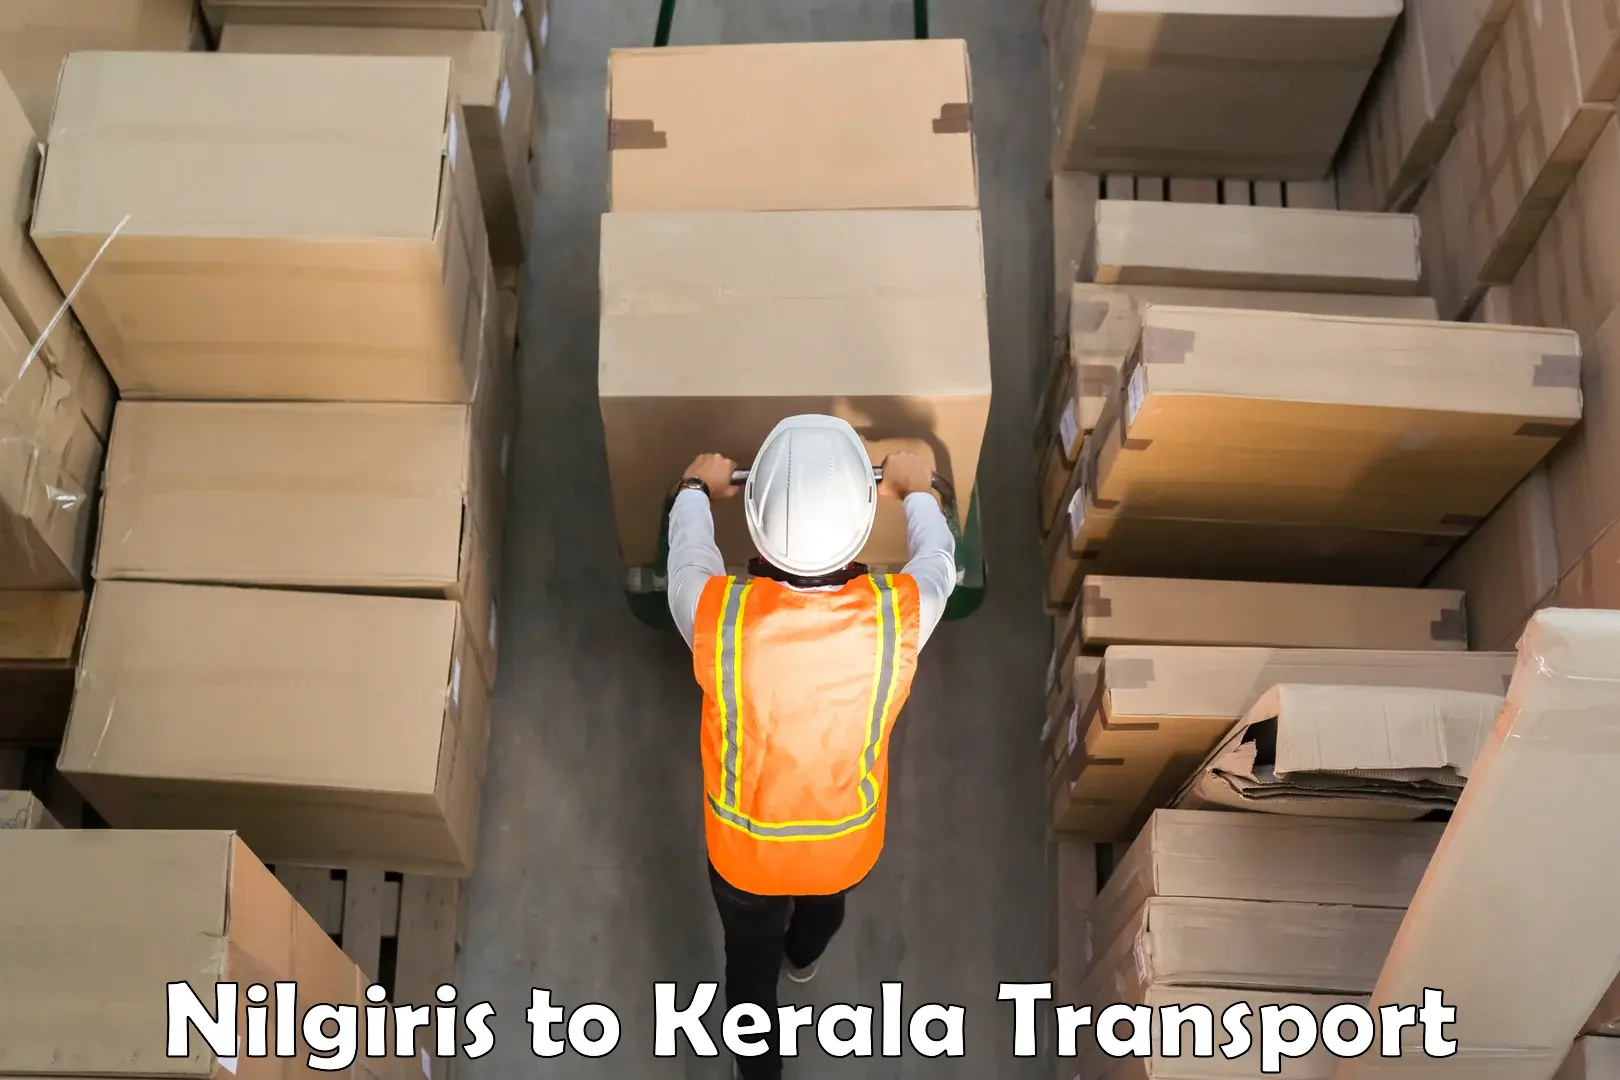 Shipping partner Nilgiris to Kannur